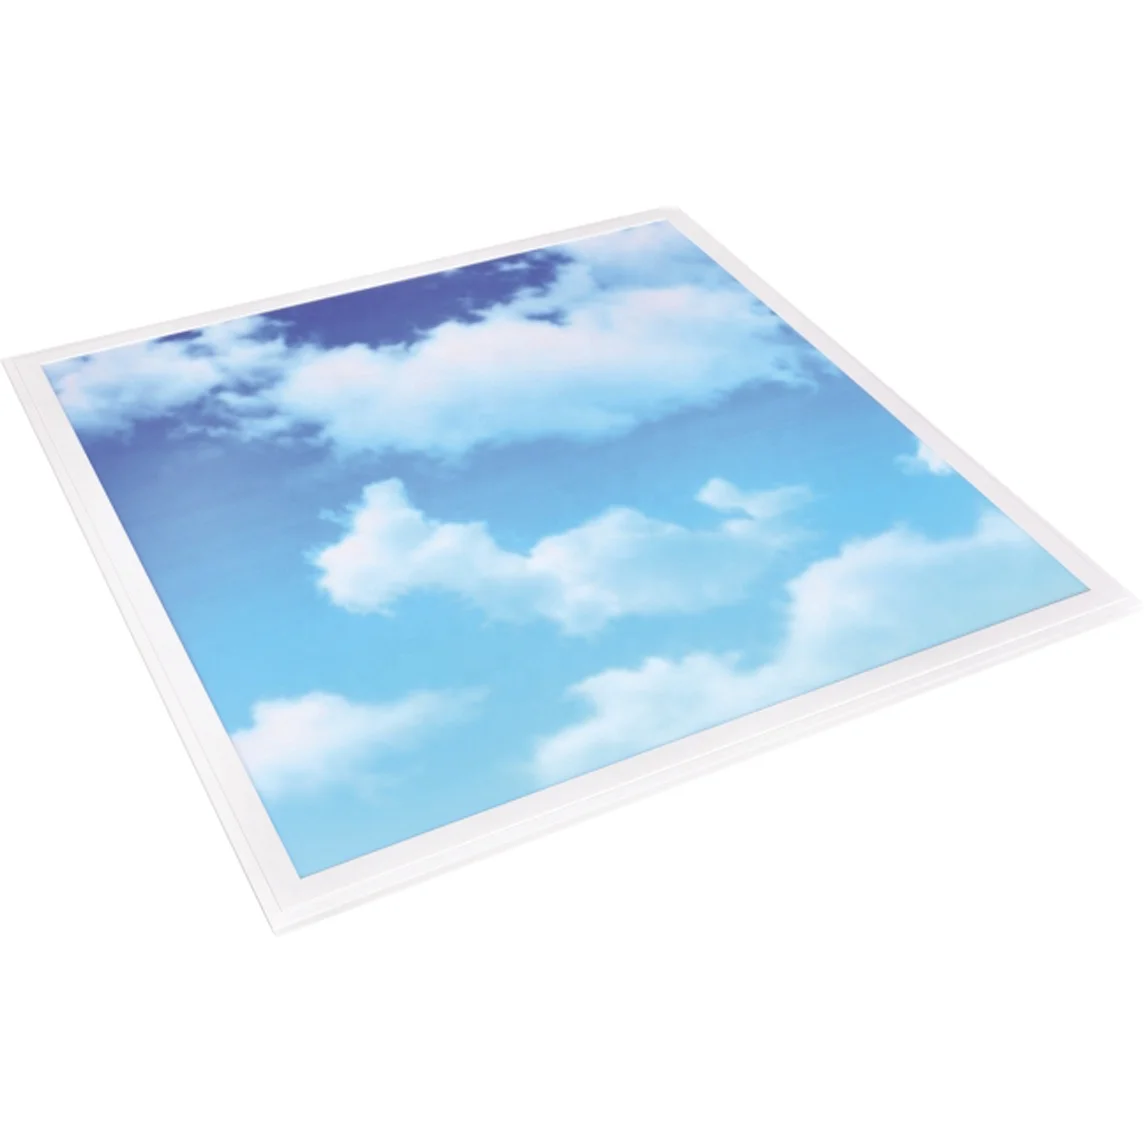 Led blue sky ceiling panel light Sky and cloud led ceiling panel 40w Led sky picture ceiling panel 600x600